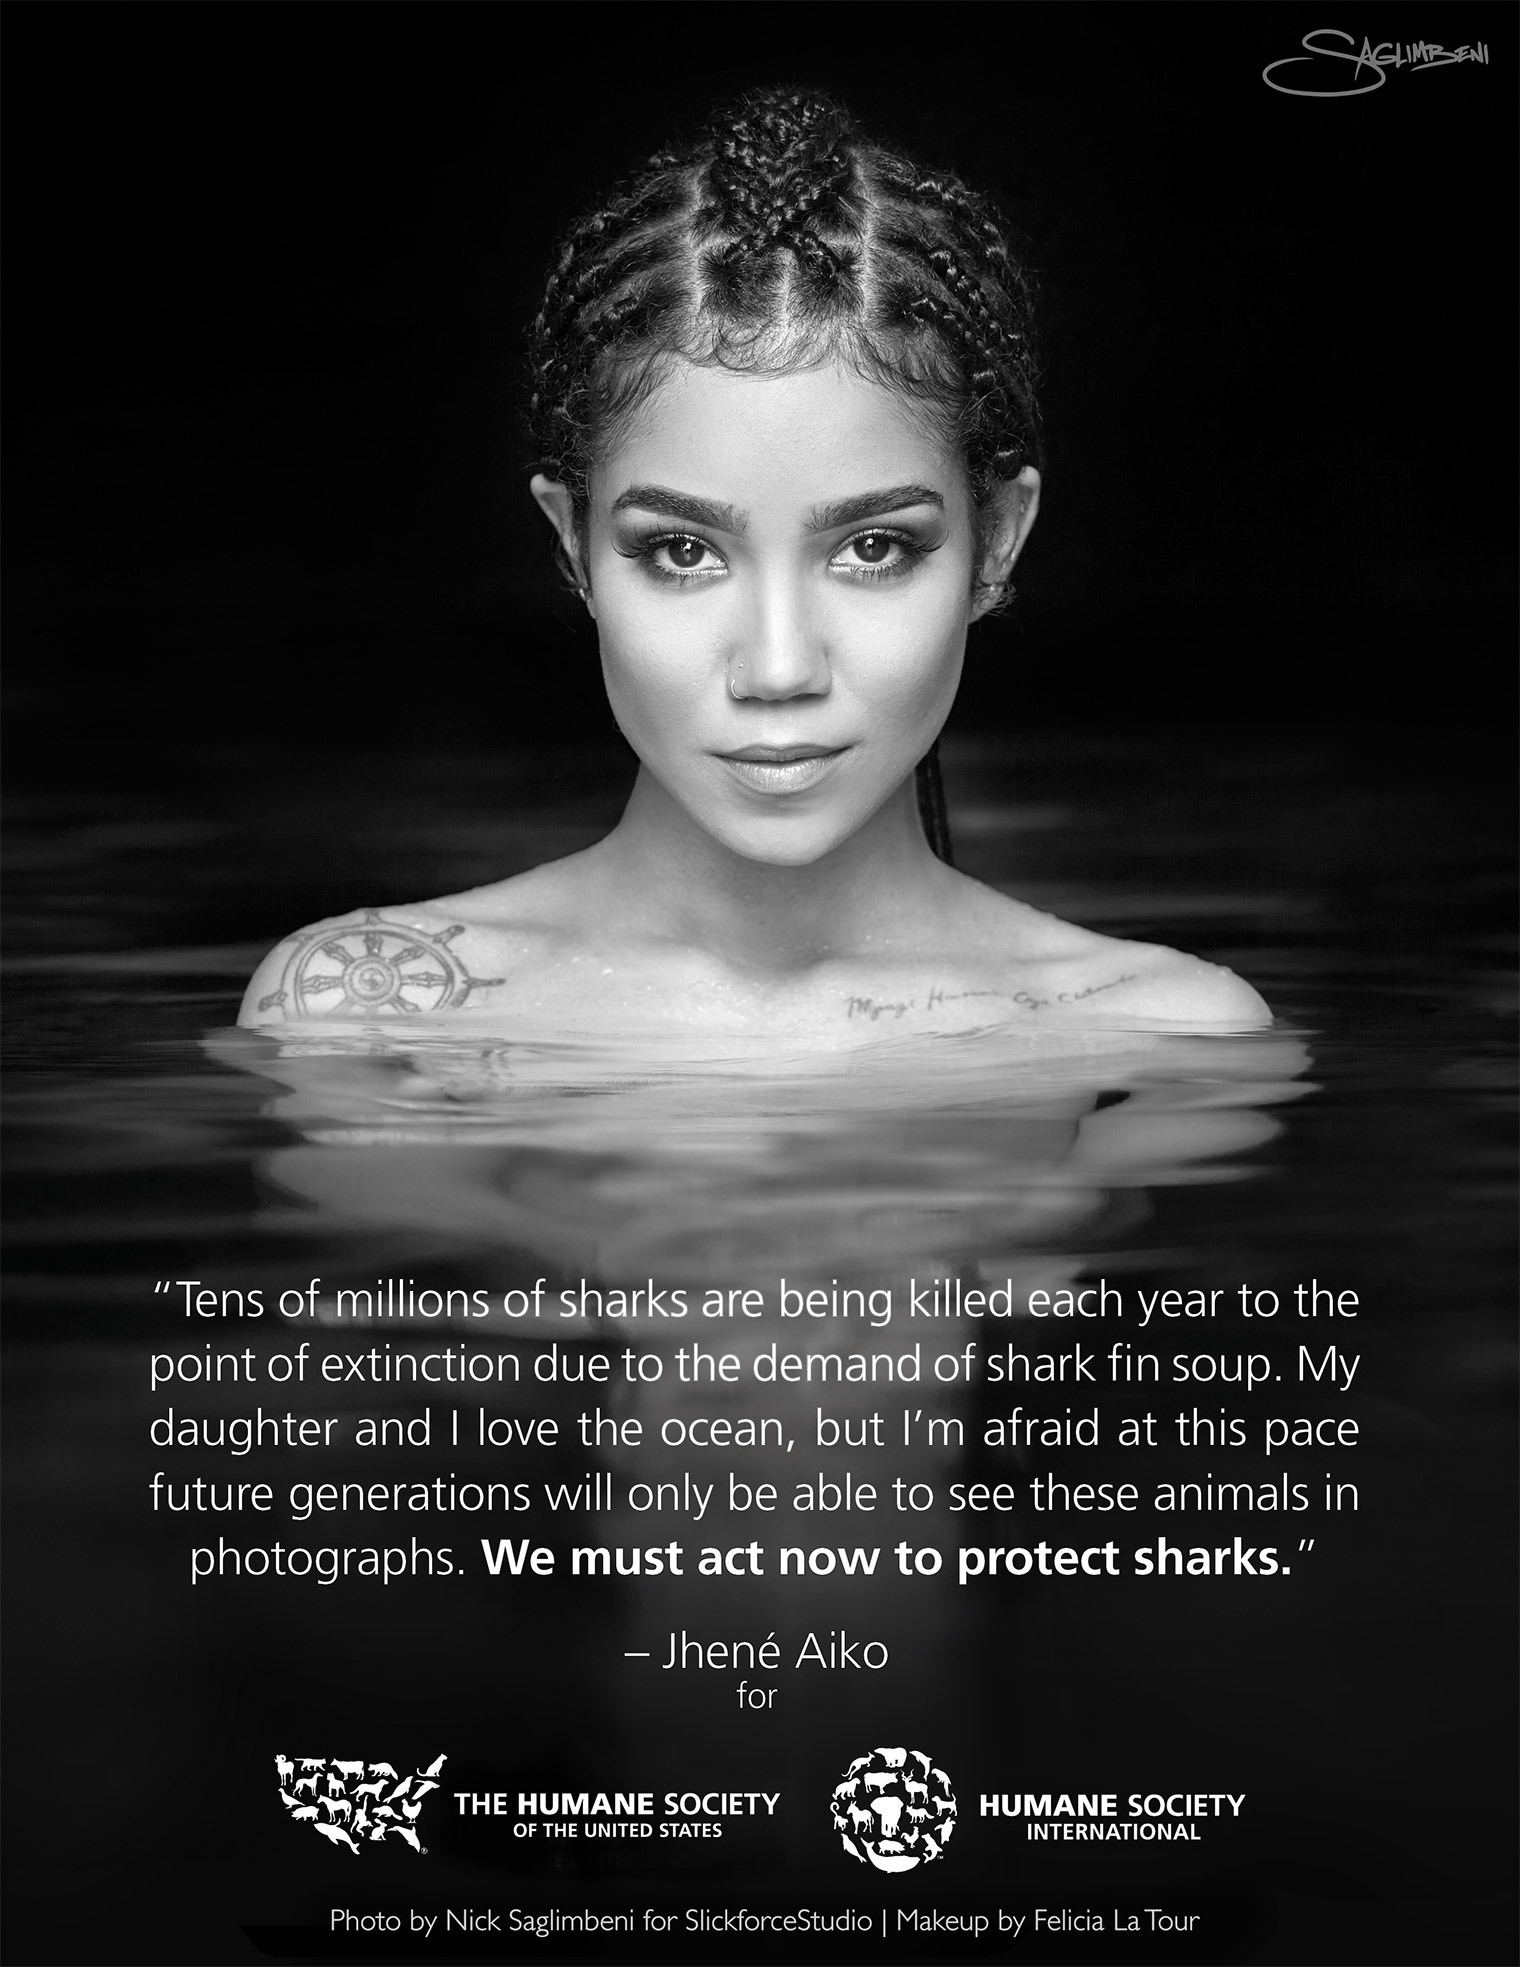 Jhene-Aiko-Protect-Sharks-Humane-Society-International-United-States-Campaign-Photo-Nick-Saglimbeni-Slickforce-Studio-2.jpg